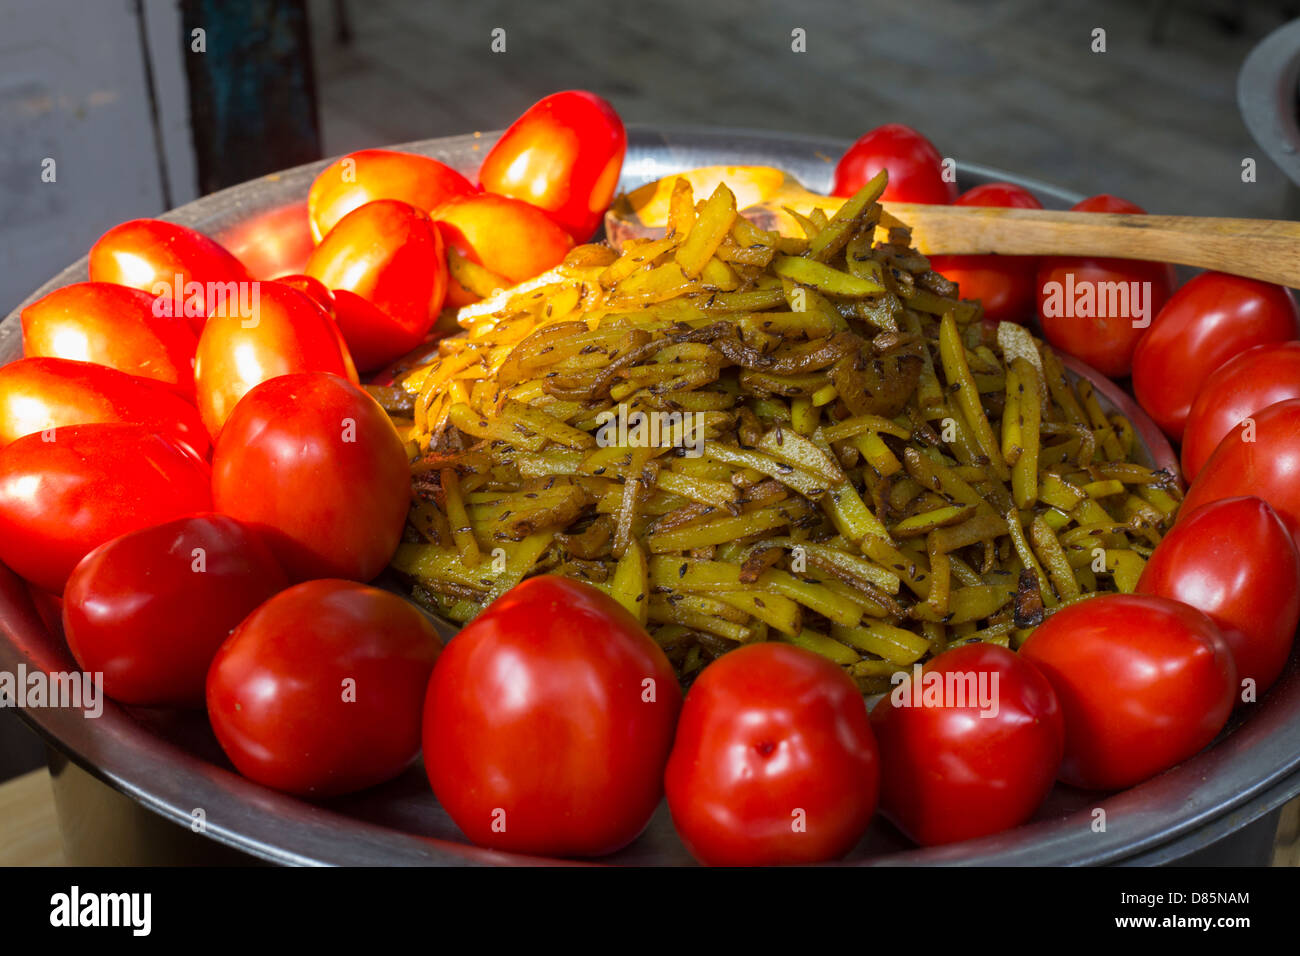 India, Uttar Pradesh, New Delhi, tomatoes and curried potato strips Stock Photo